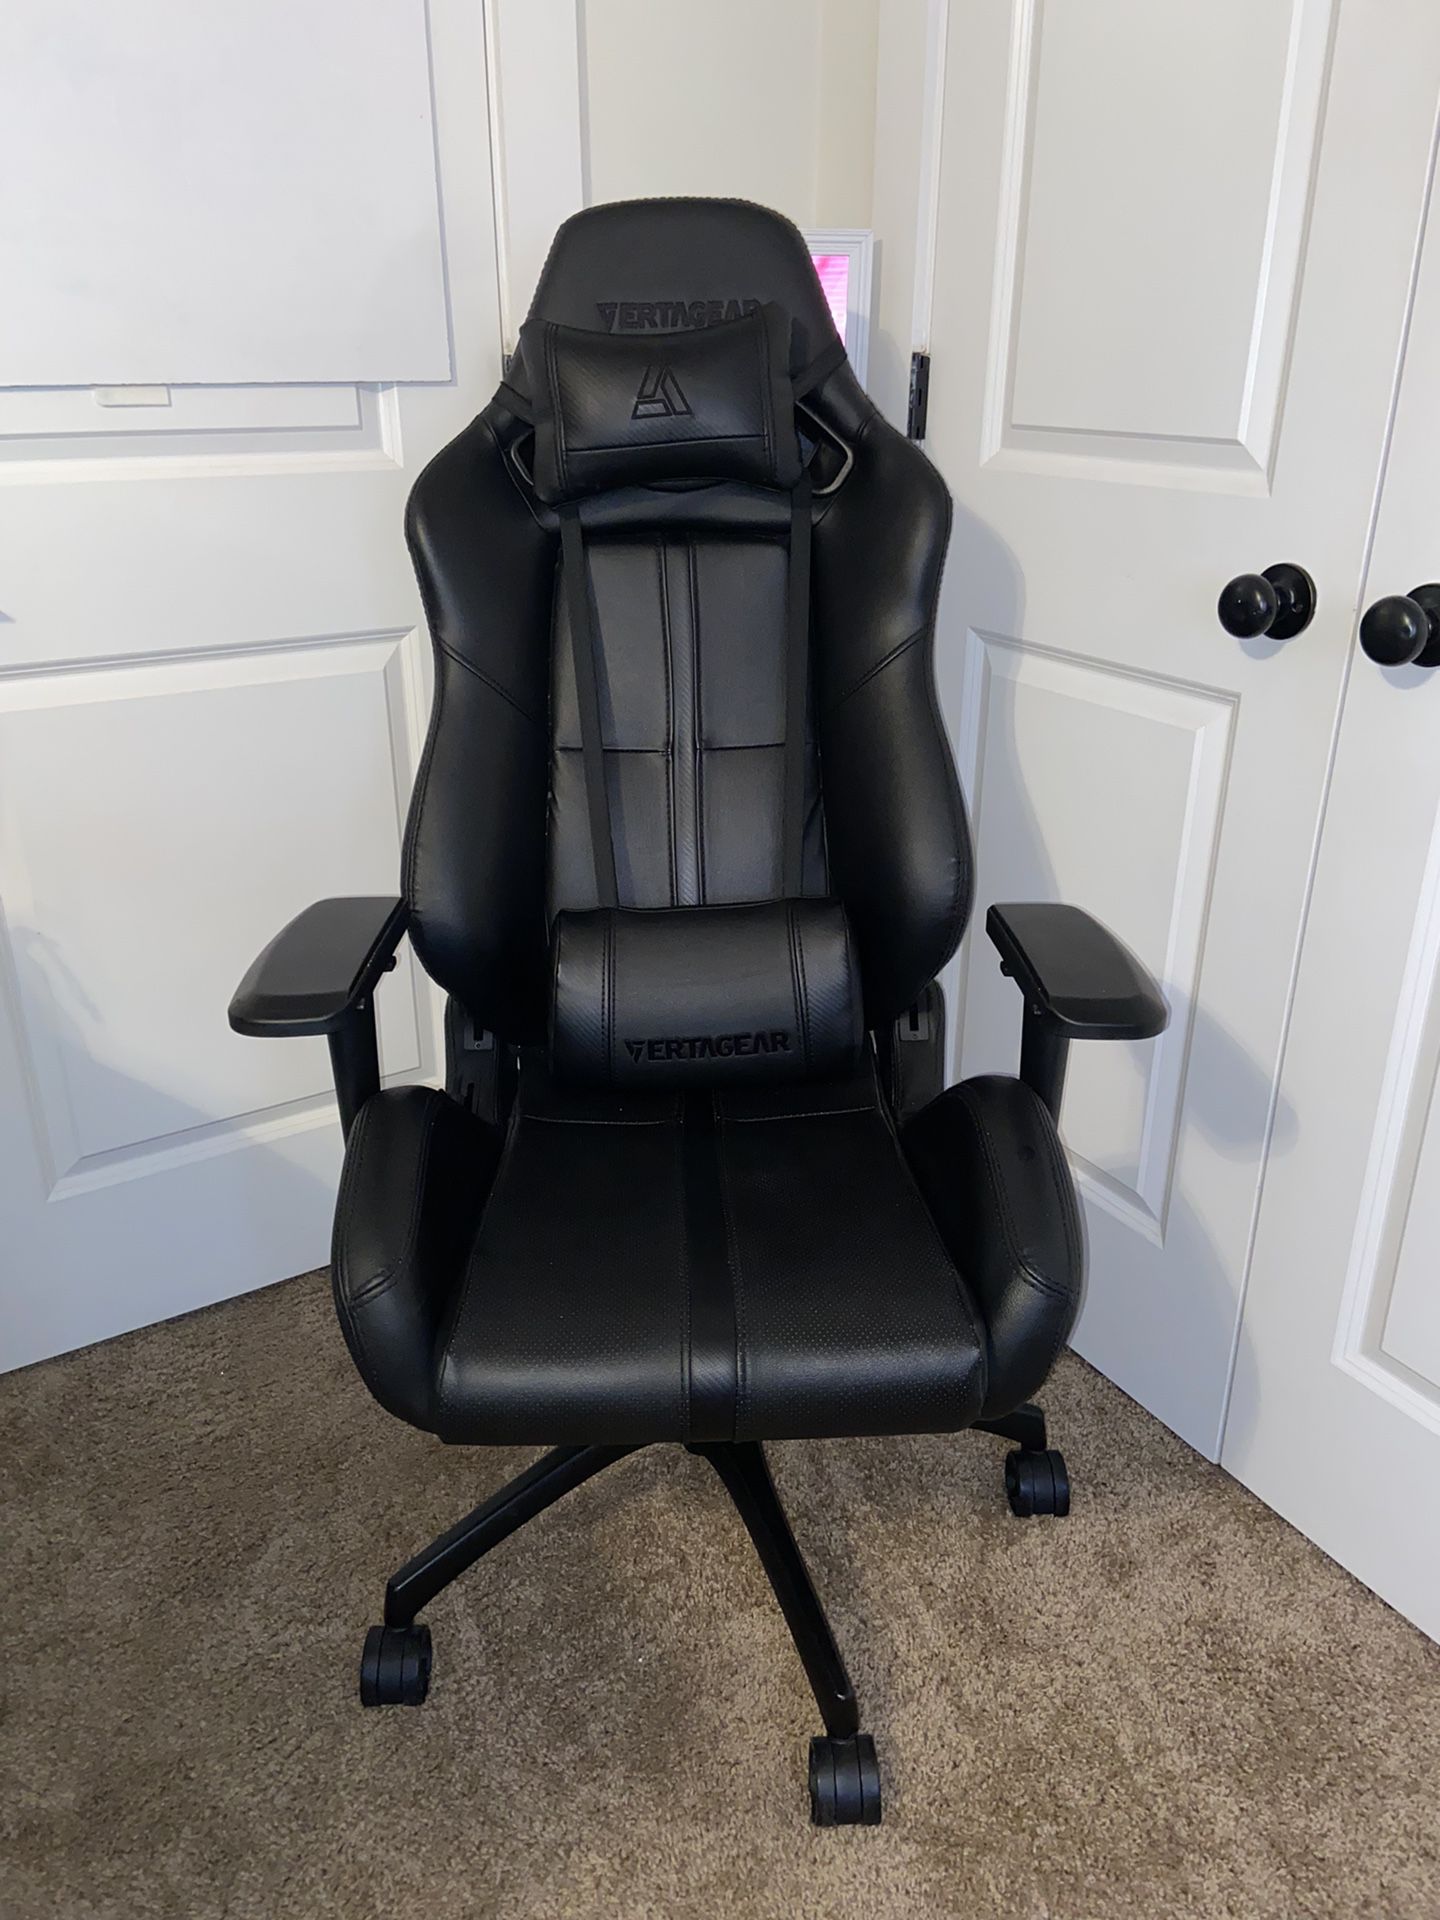 Vertagear SL5000: Gaming Chair 